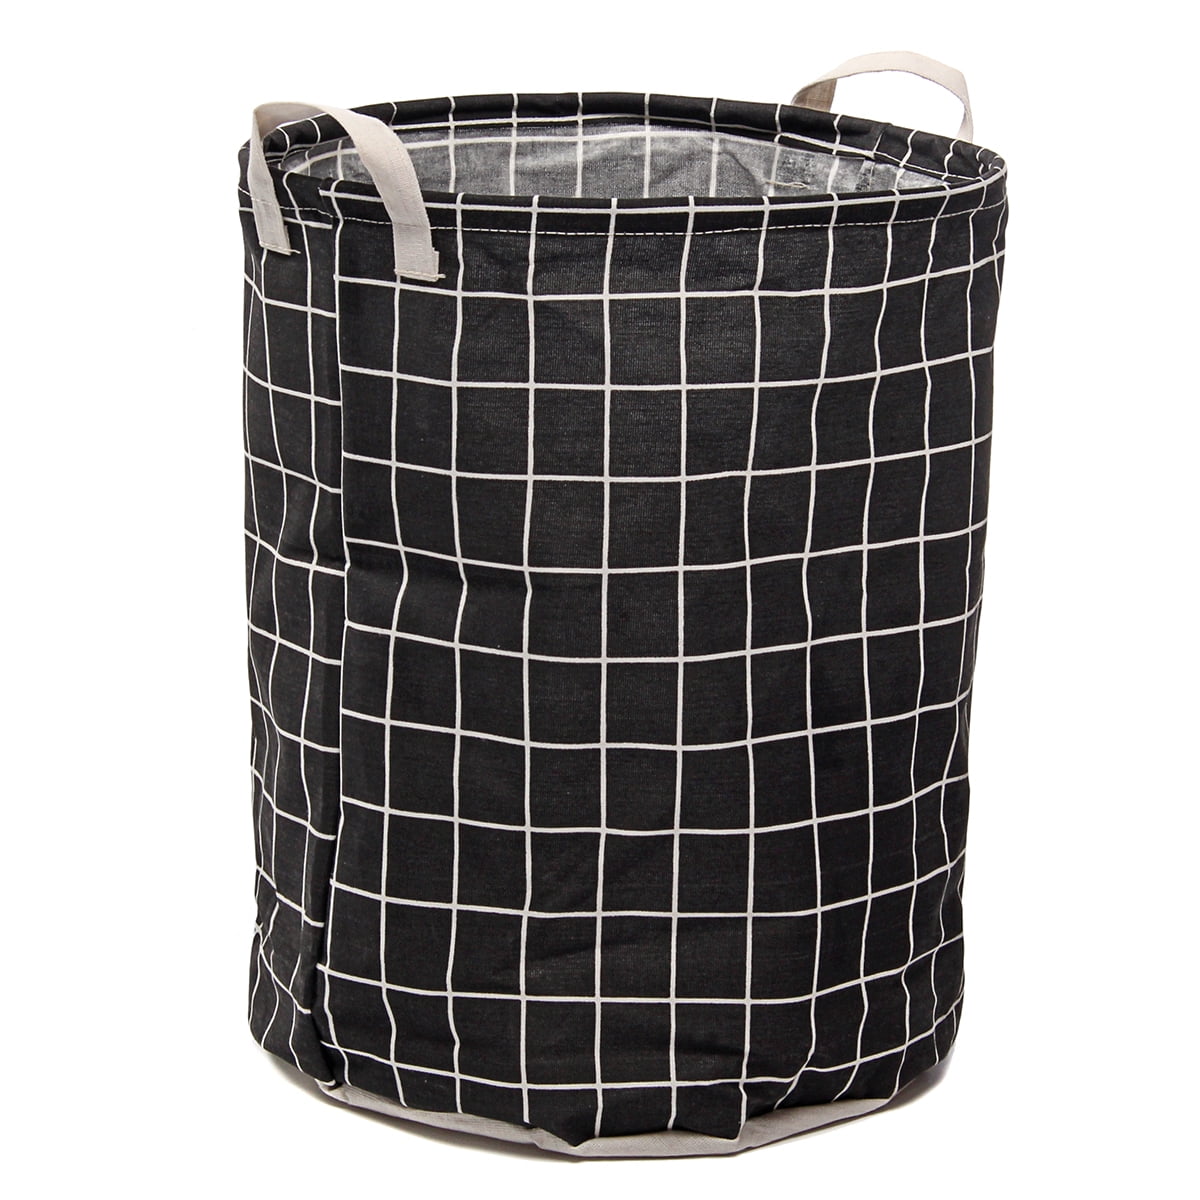 Laundry Basket Bag Foldable Cotton Linen Washing Clothes Hamper Storage LI